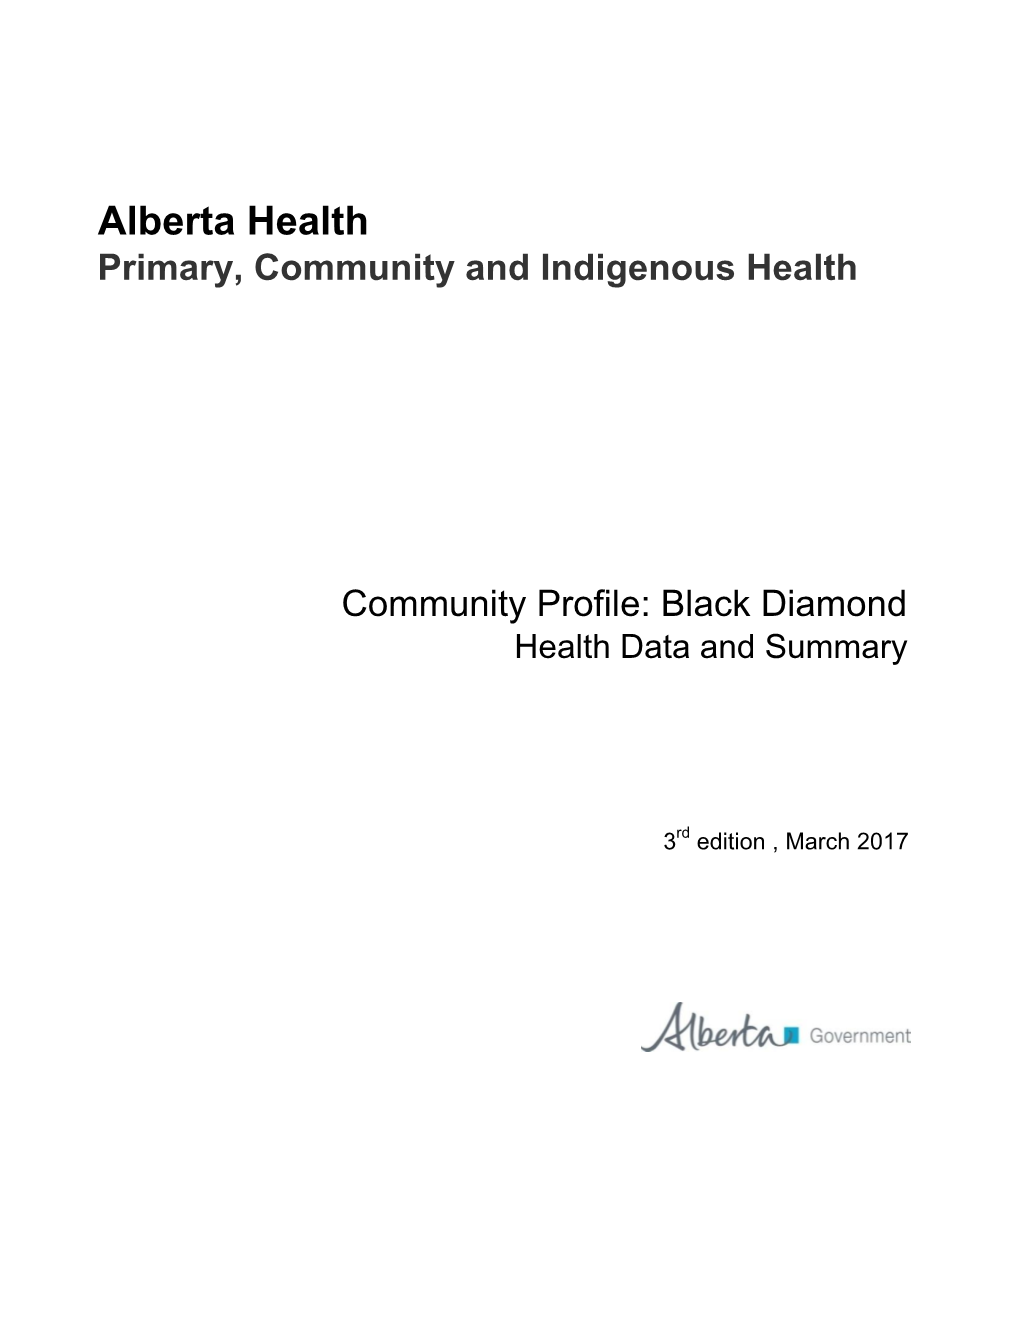 Black Diamond Health Data and Summary